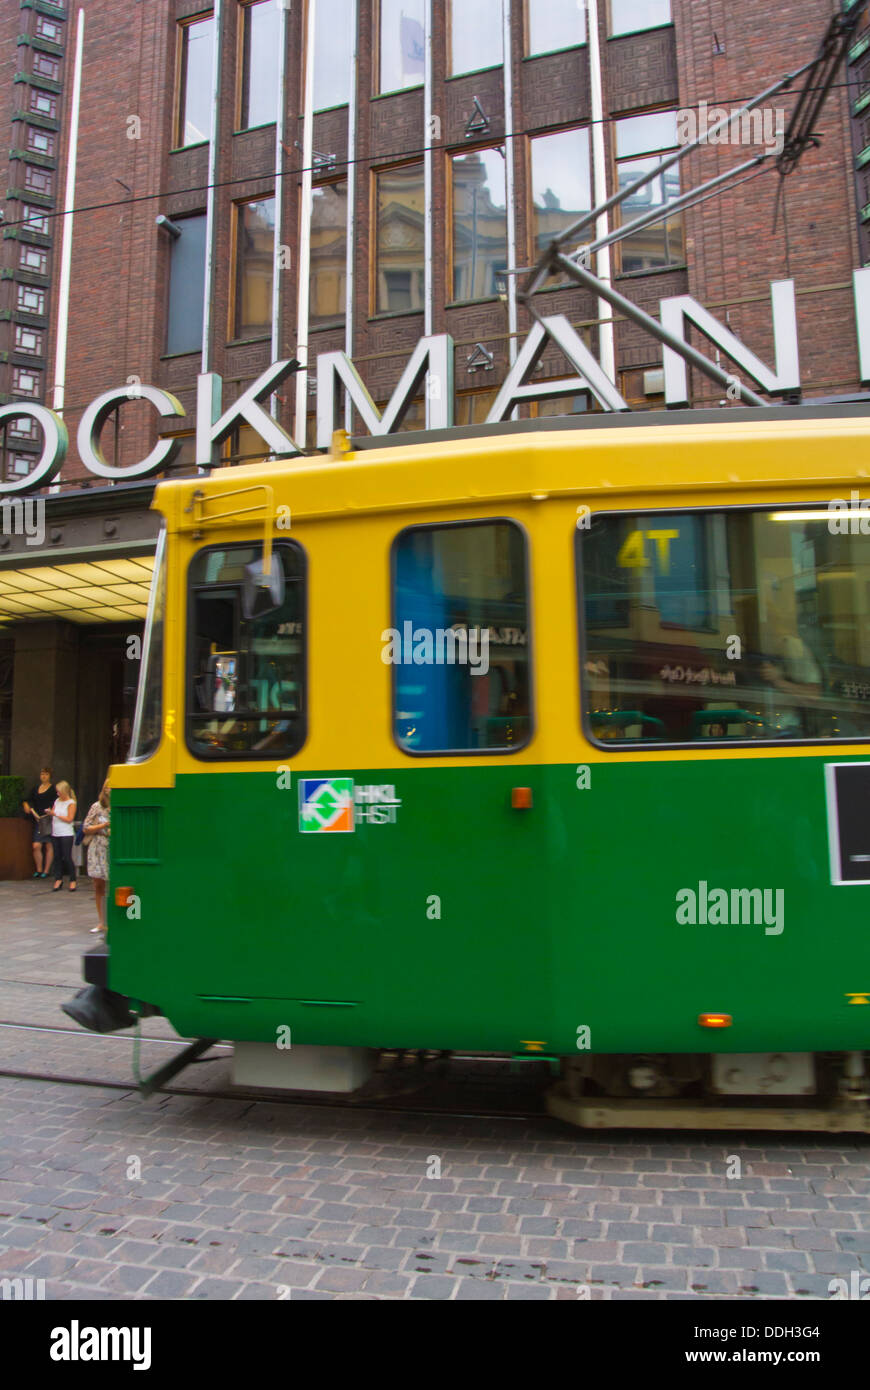 En tram Aleksanterinkatu street en face du grand magasin Stockmann Helsinkii Finlande du nord de l'Europe centrale Banque D'Images